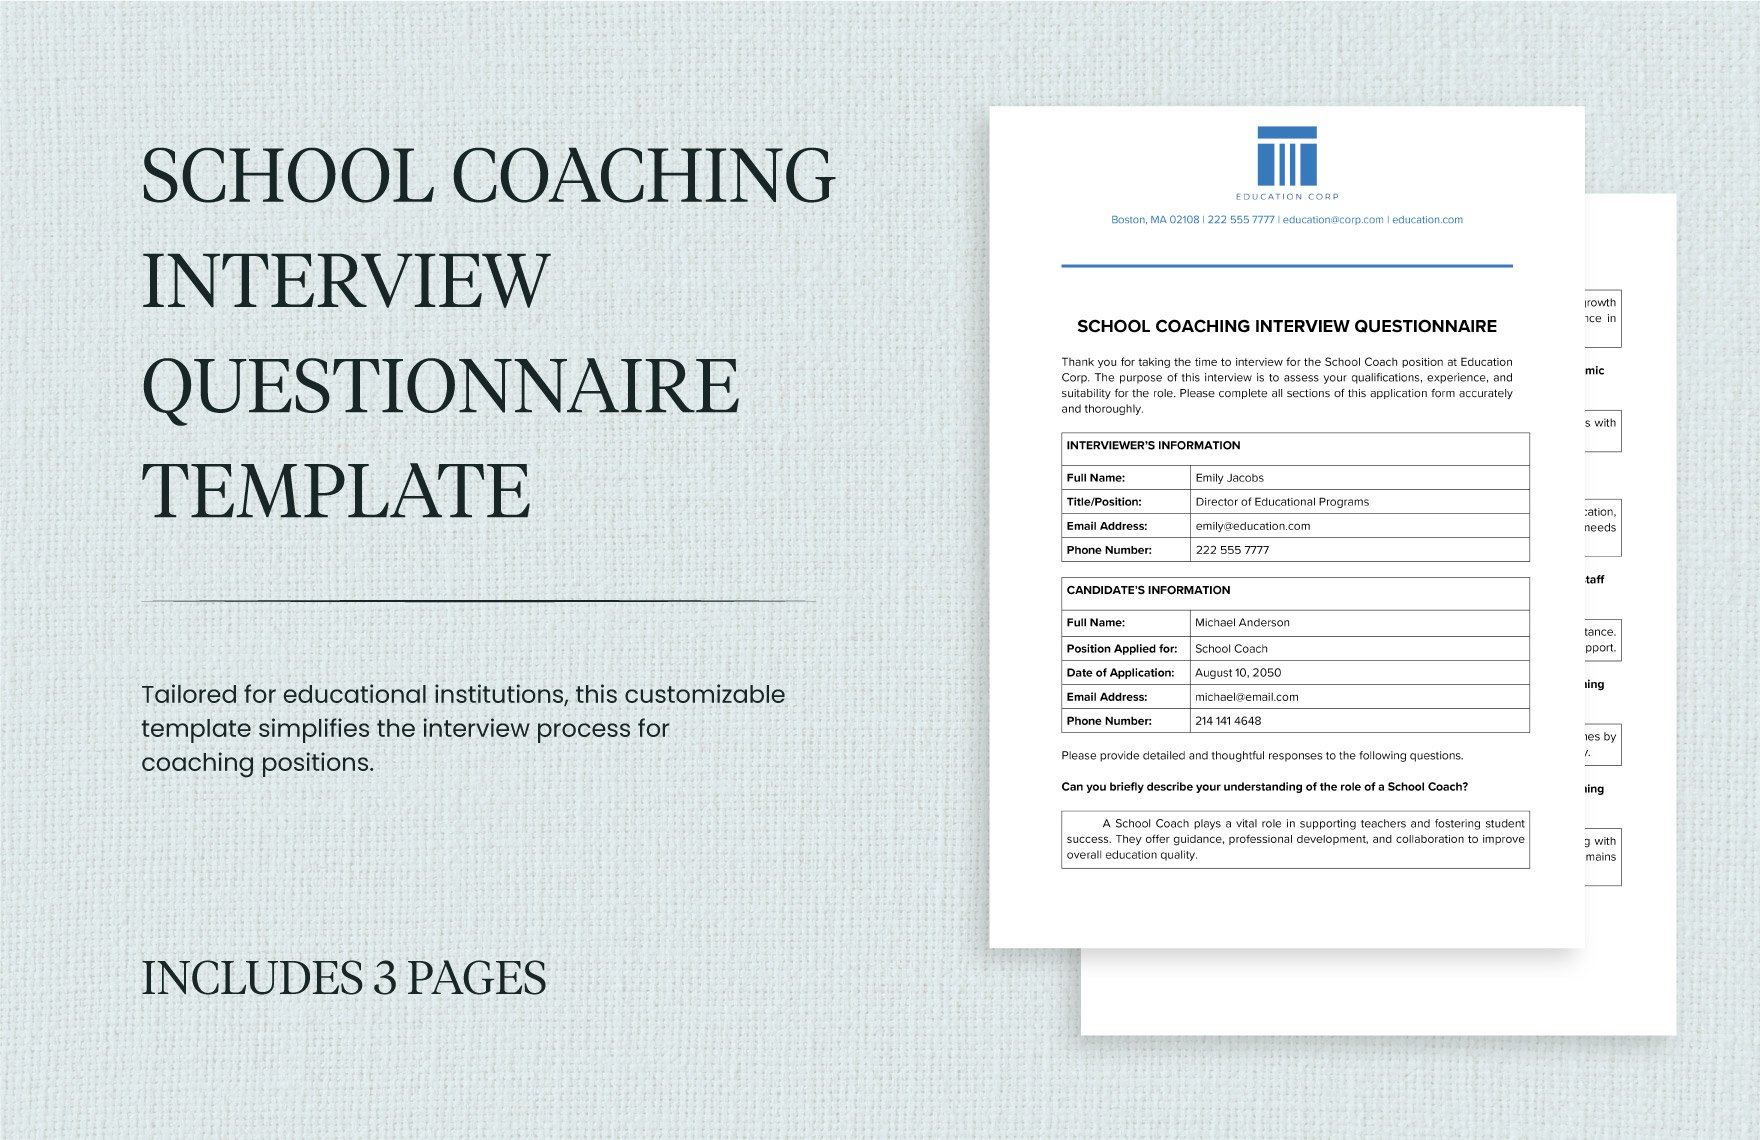 School Coaching Interview Questionnaire Template